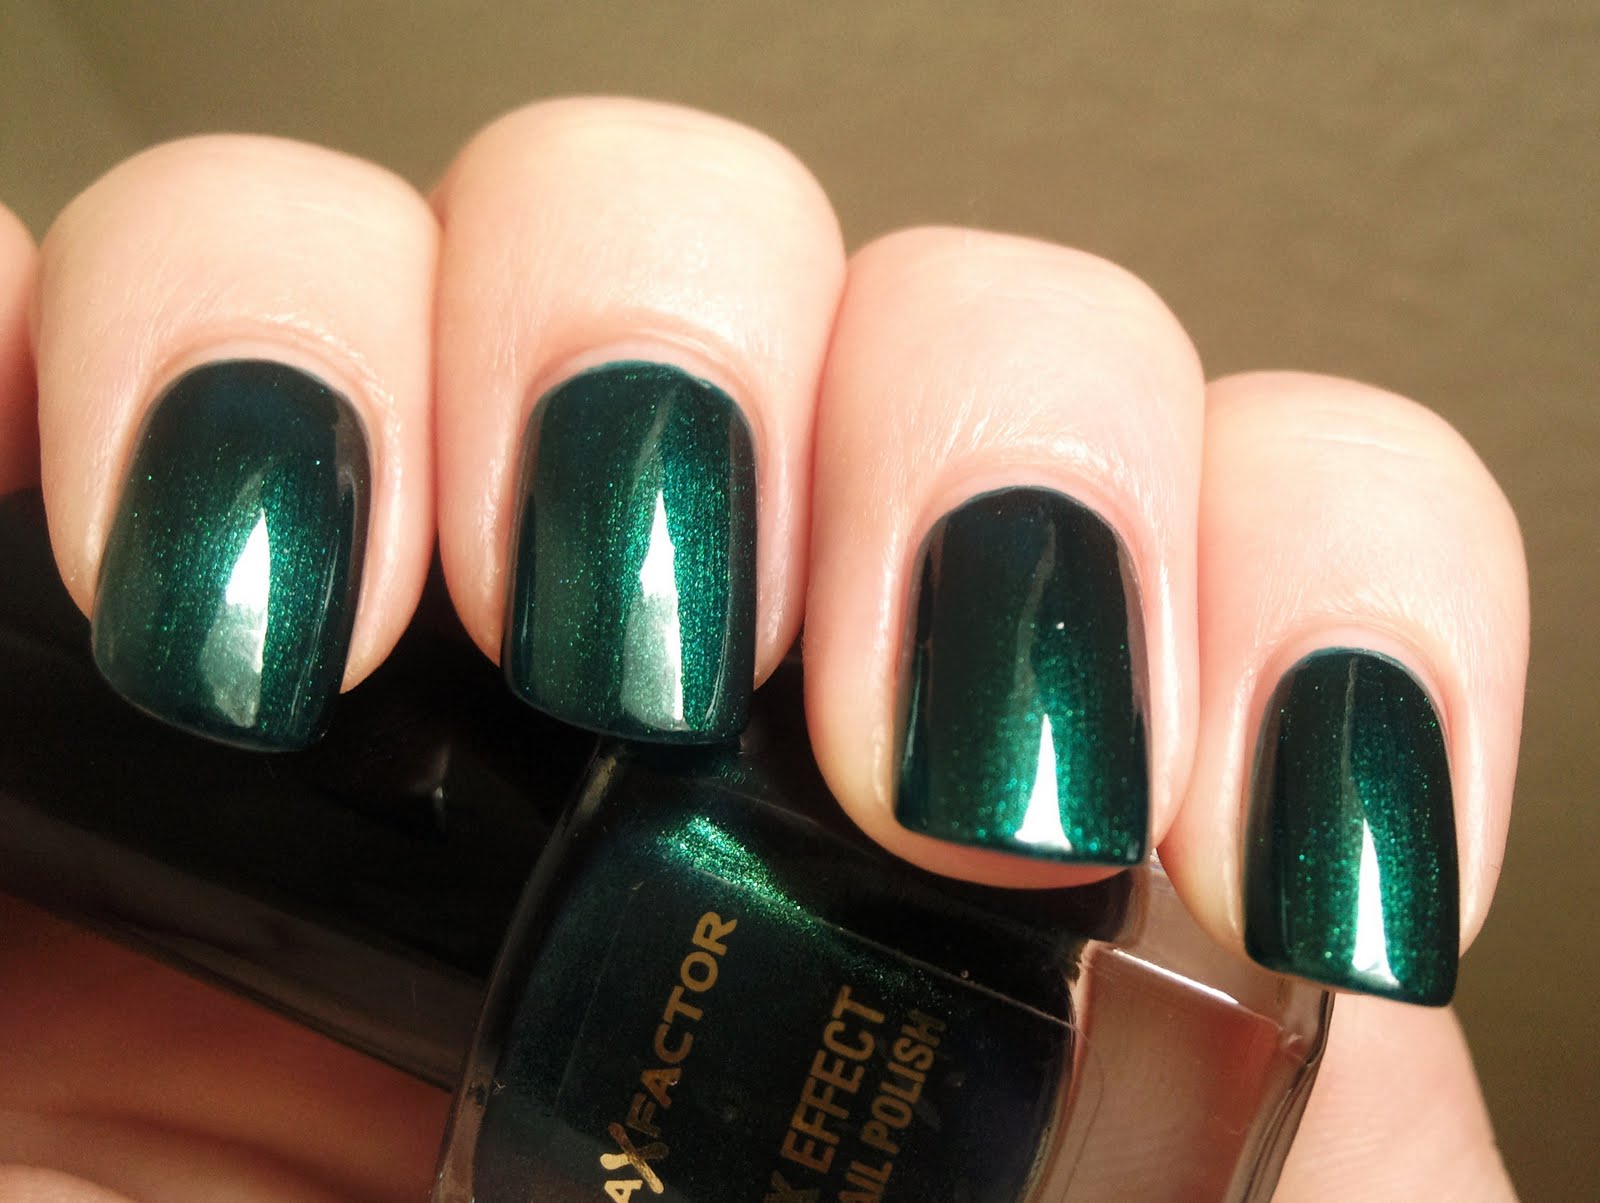 4. "Emerald Green" - wide 5